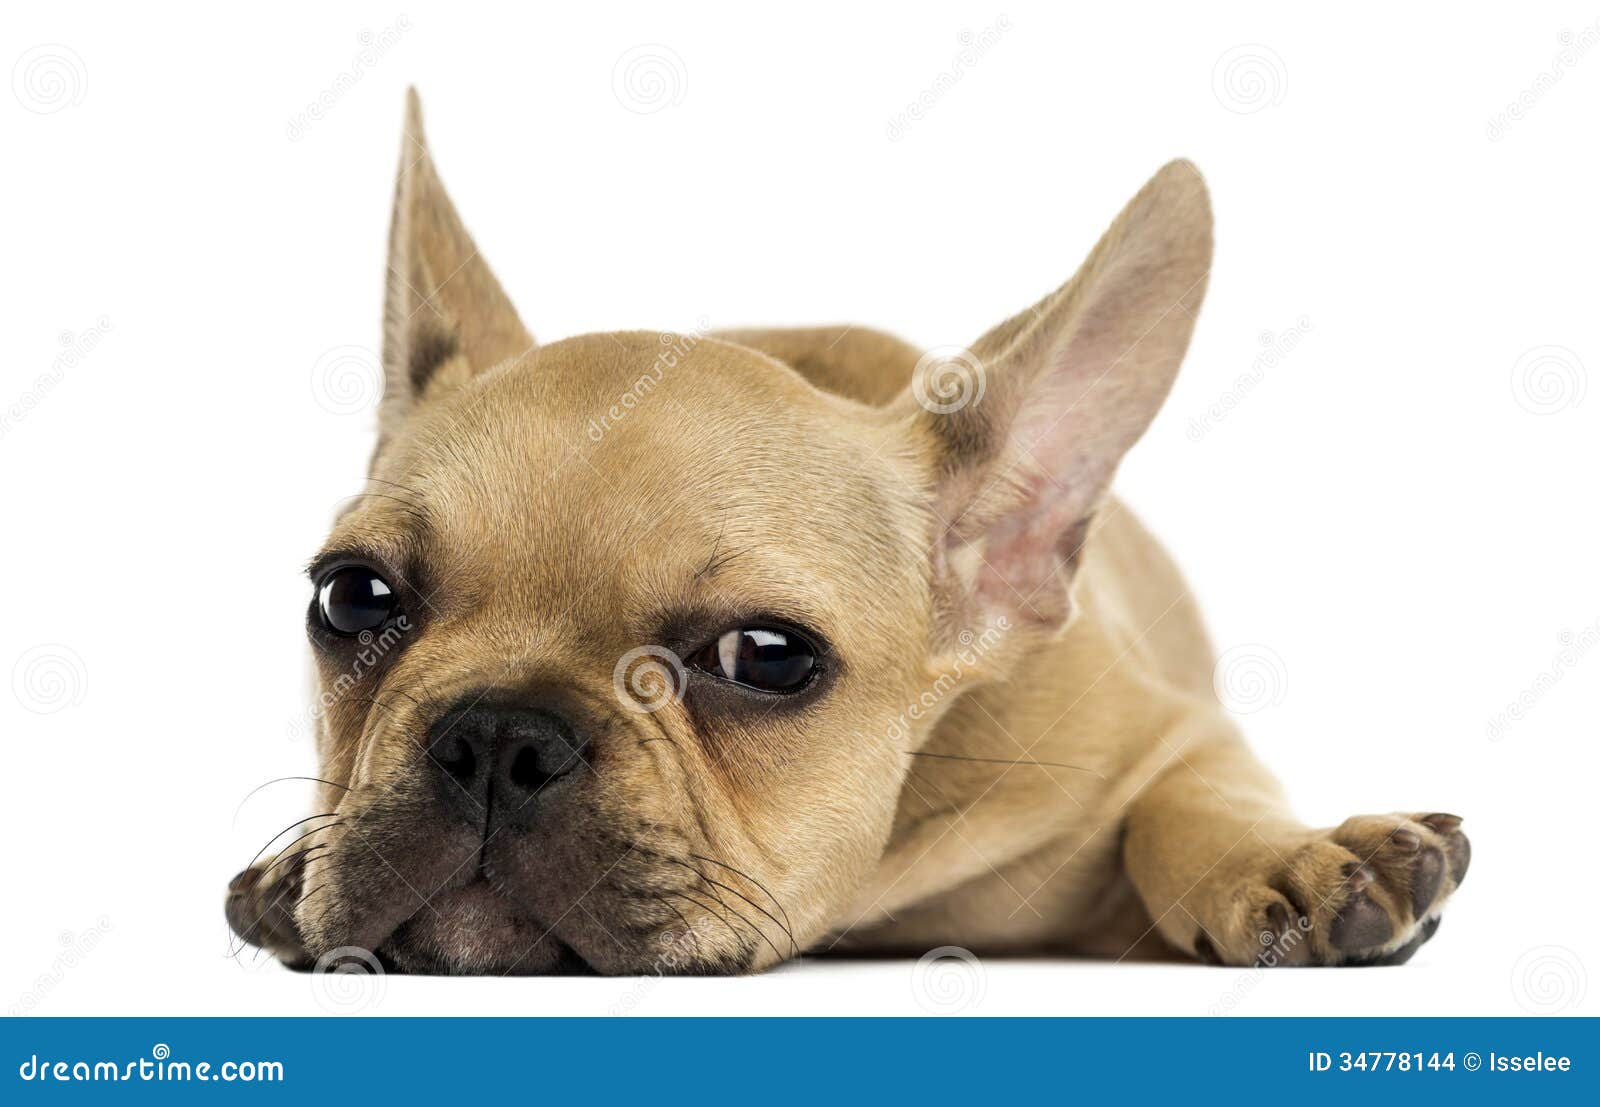 French Bulldog Puppy Lying Down, Looking At The Camera